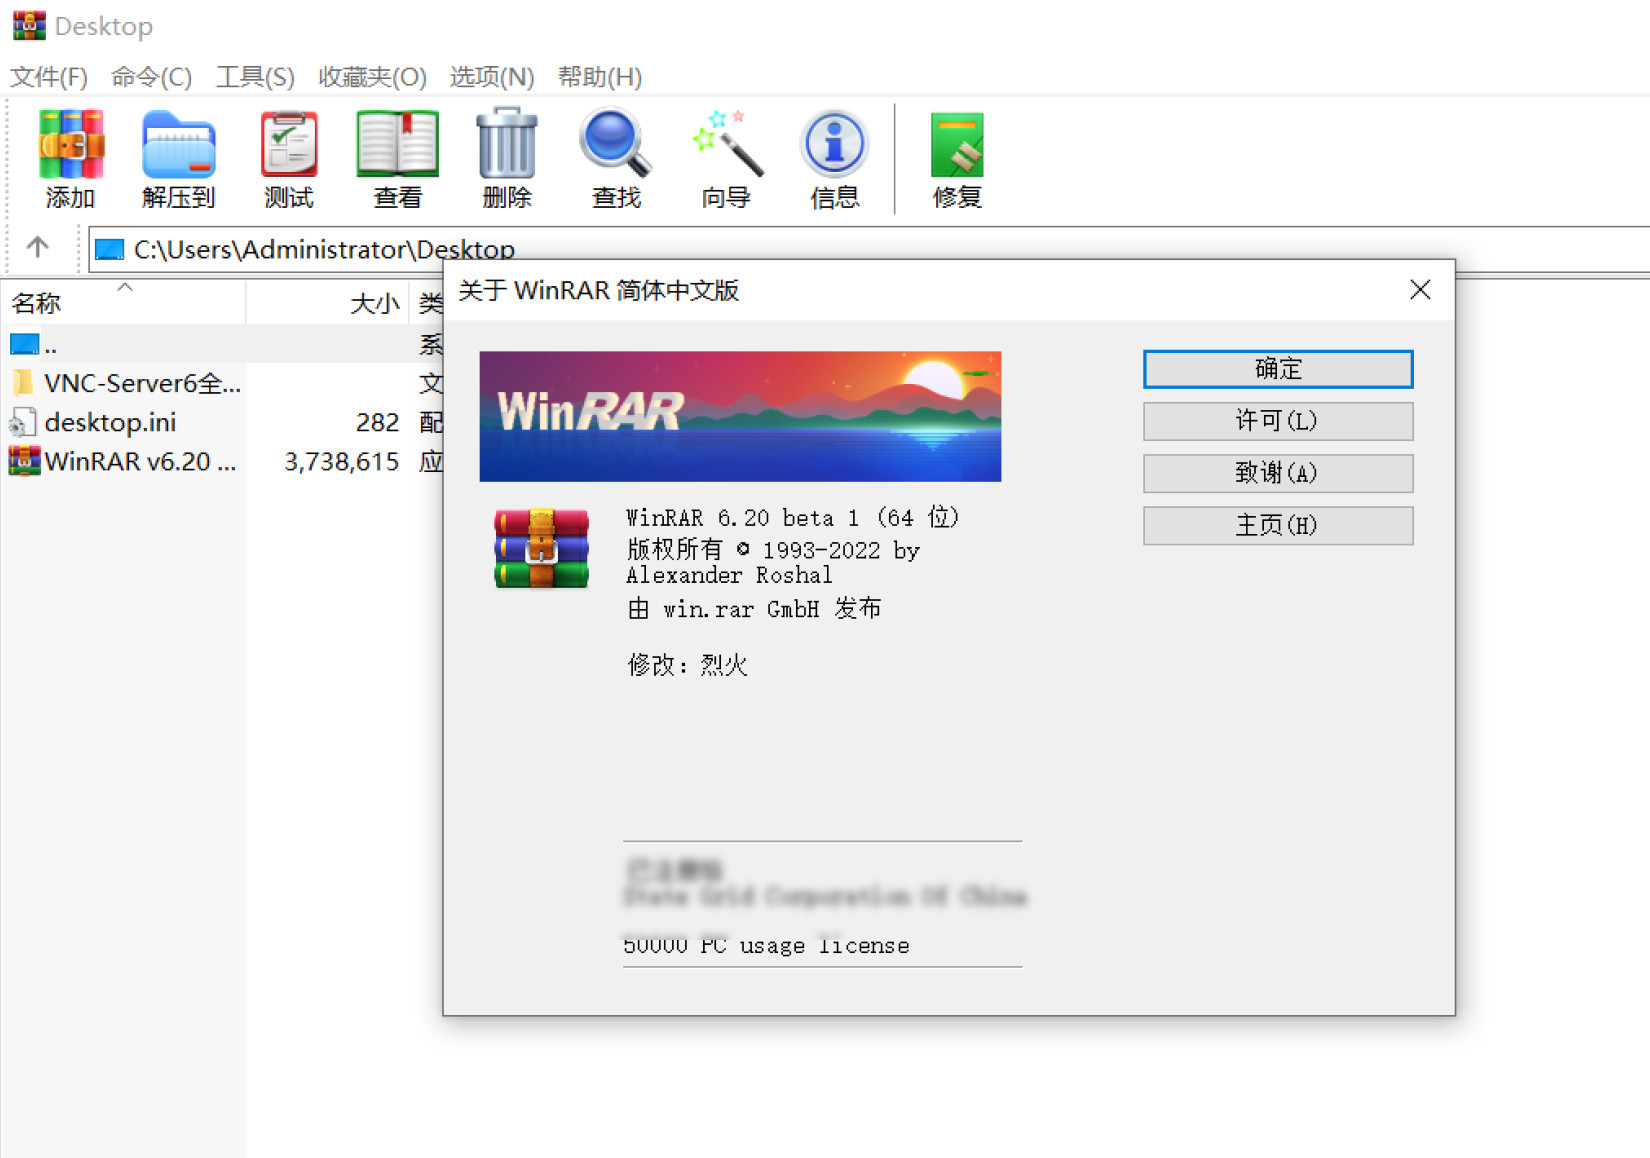 WinRAR_6.20 beta 1_x64 烈火